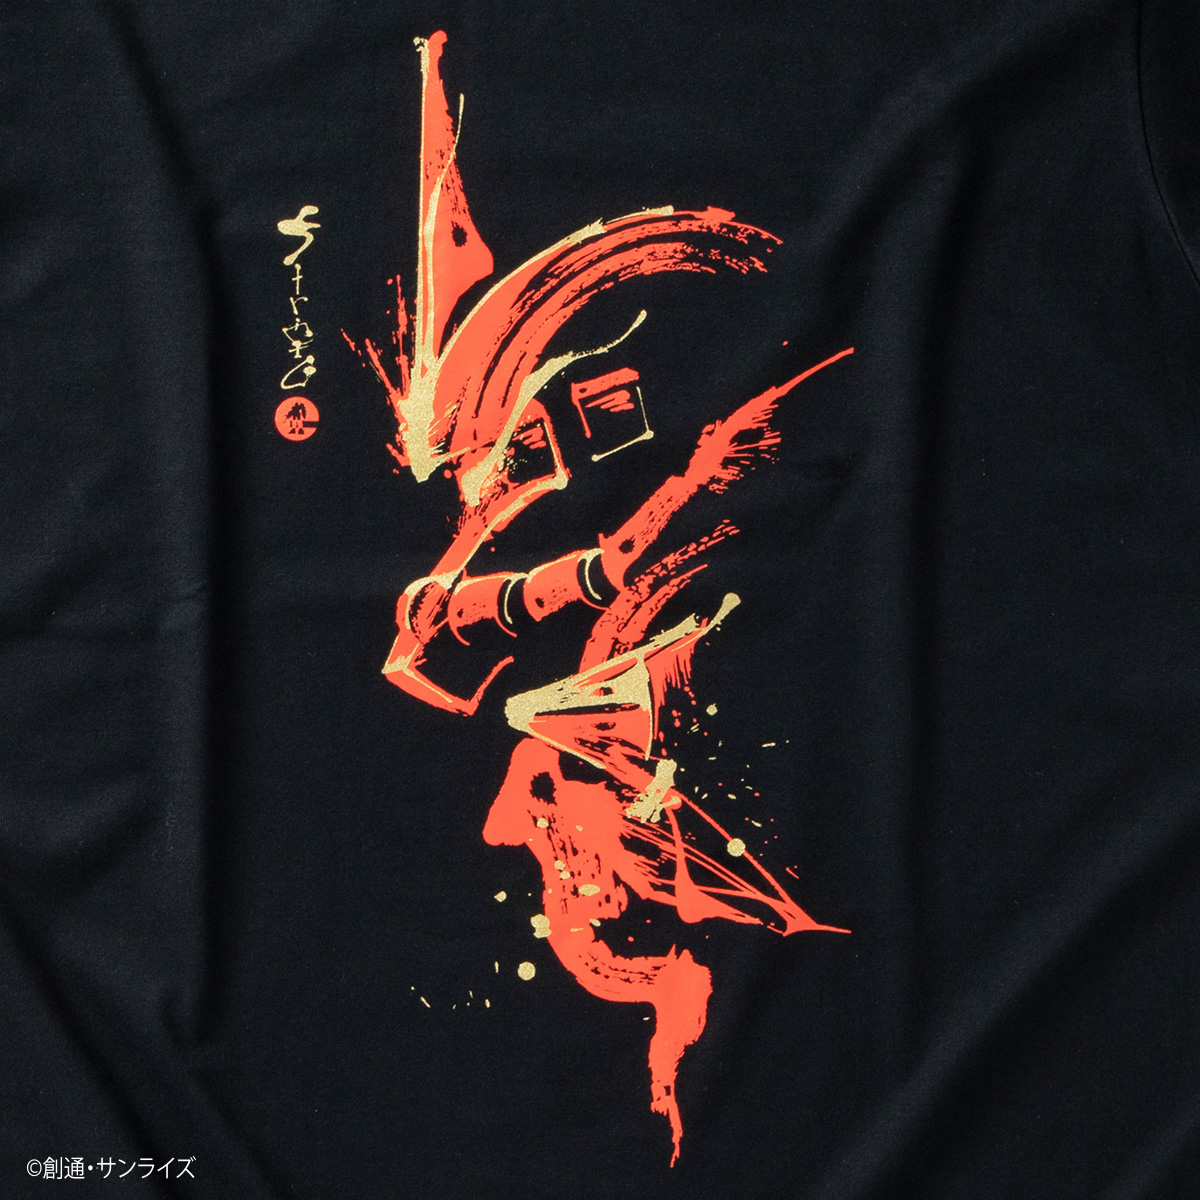 STRICT-G JAPAN『機動戦士ガンダム』筆絵半袖Tシャツ シャア専用ザクII